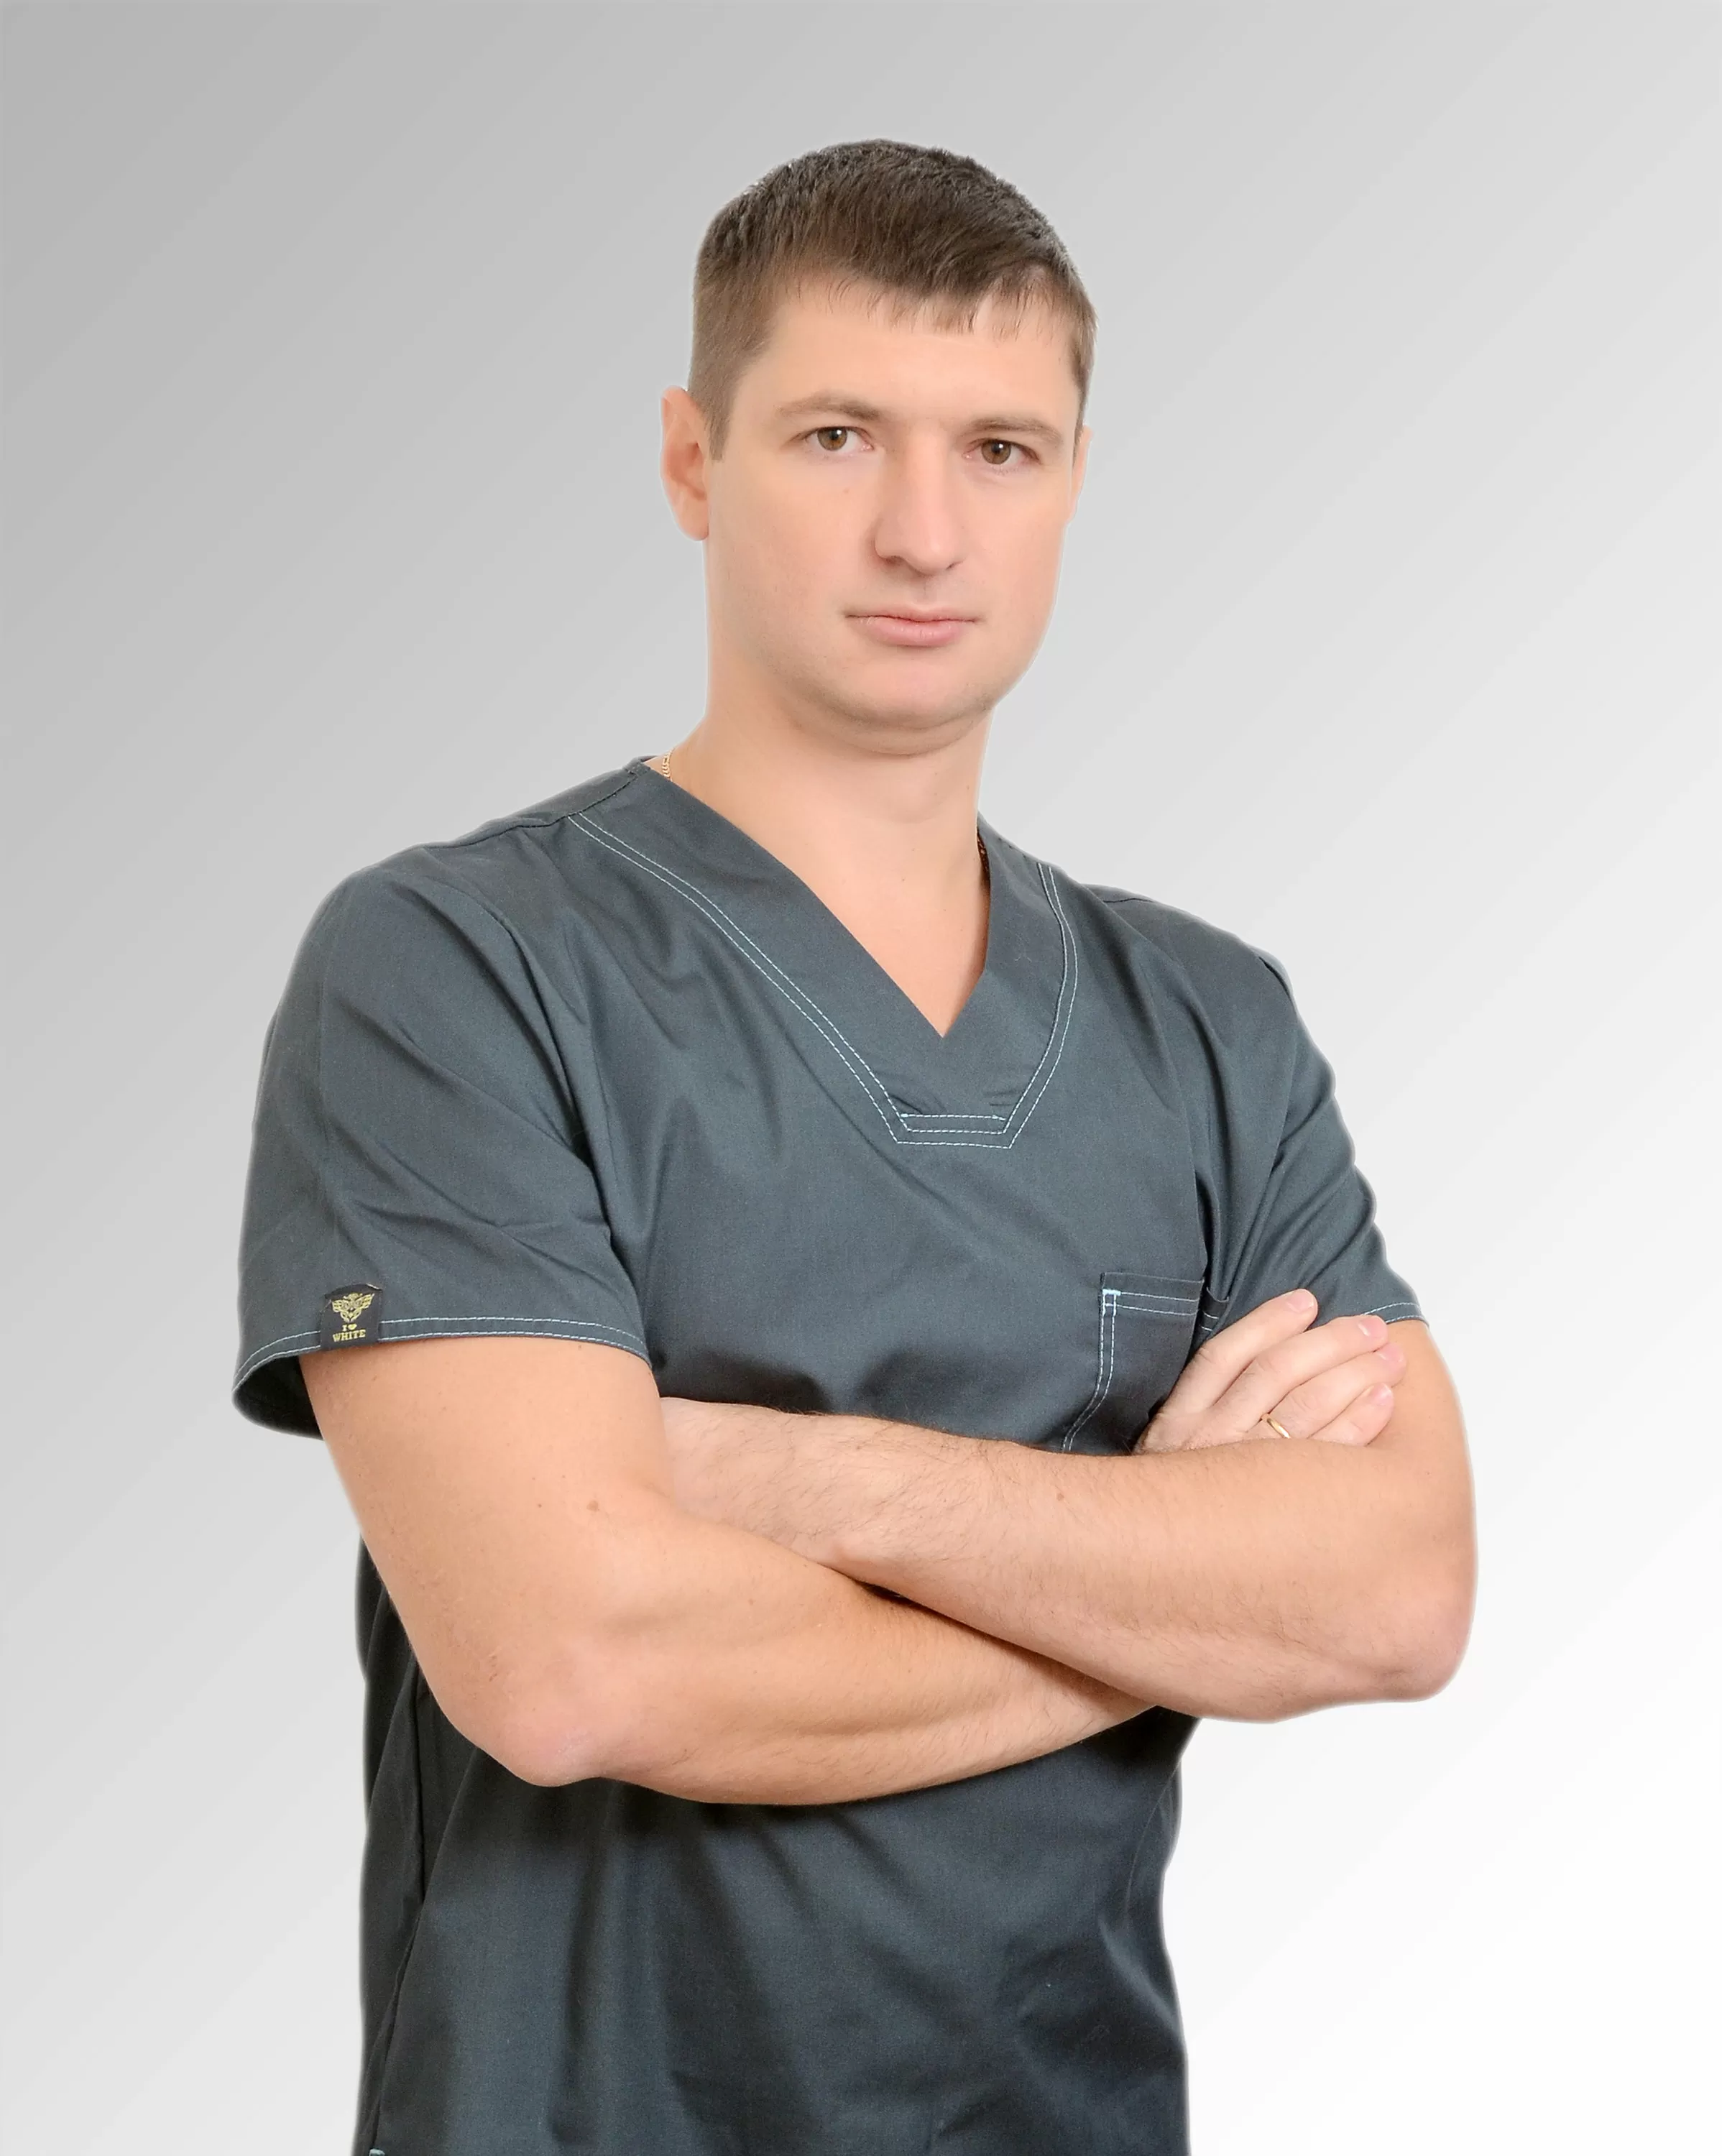 Сергеев врач краснодар